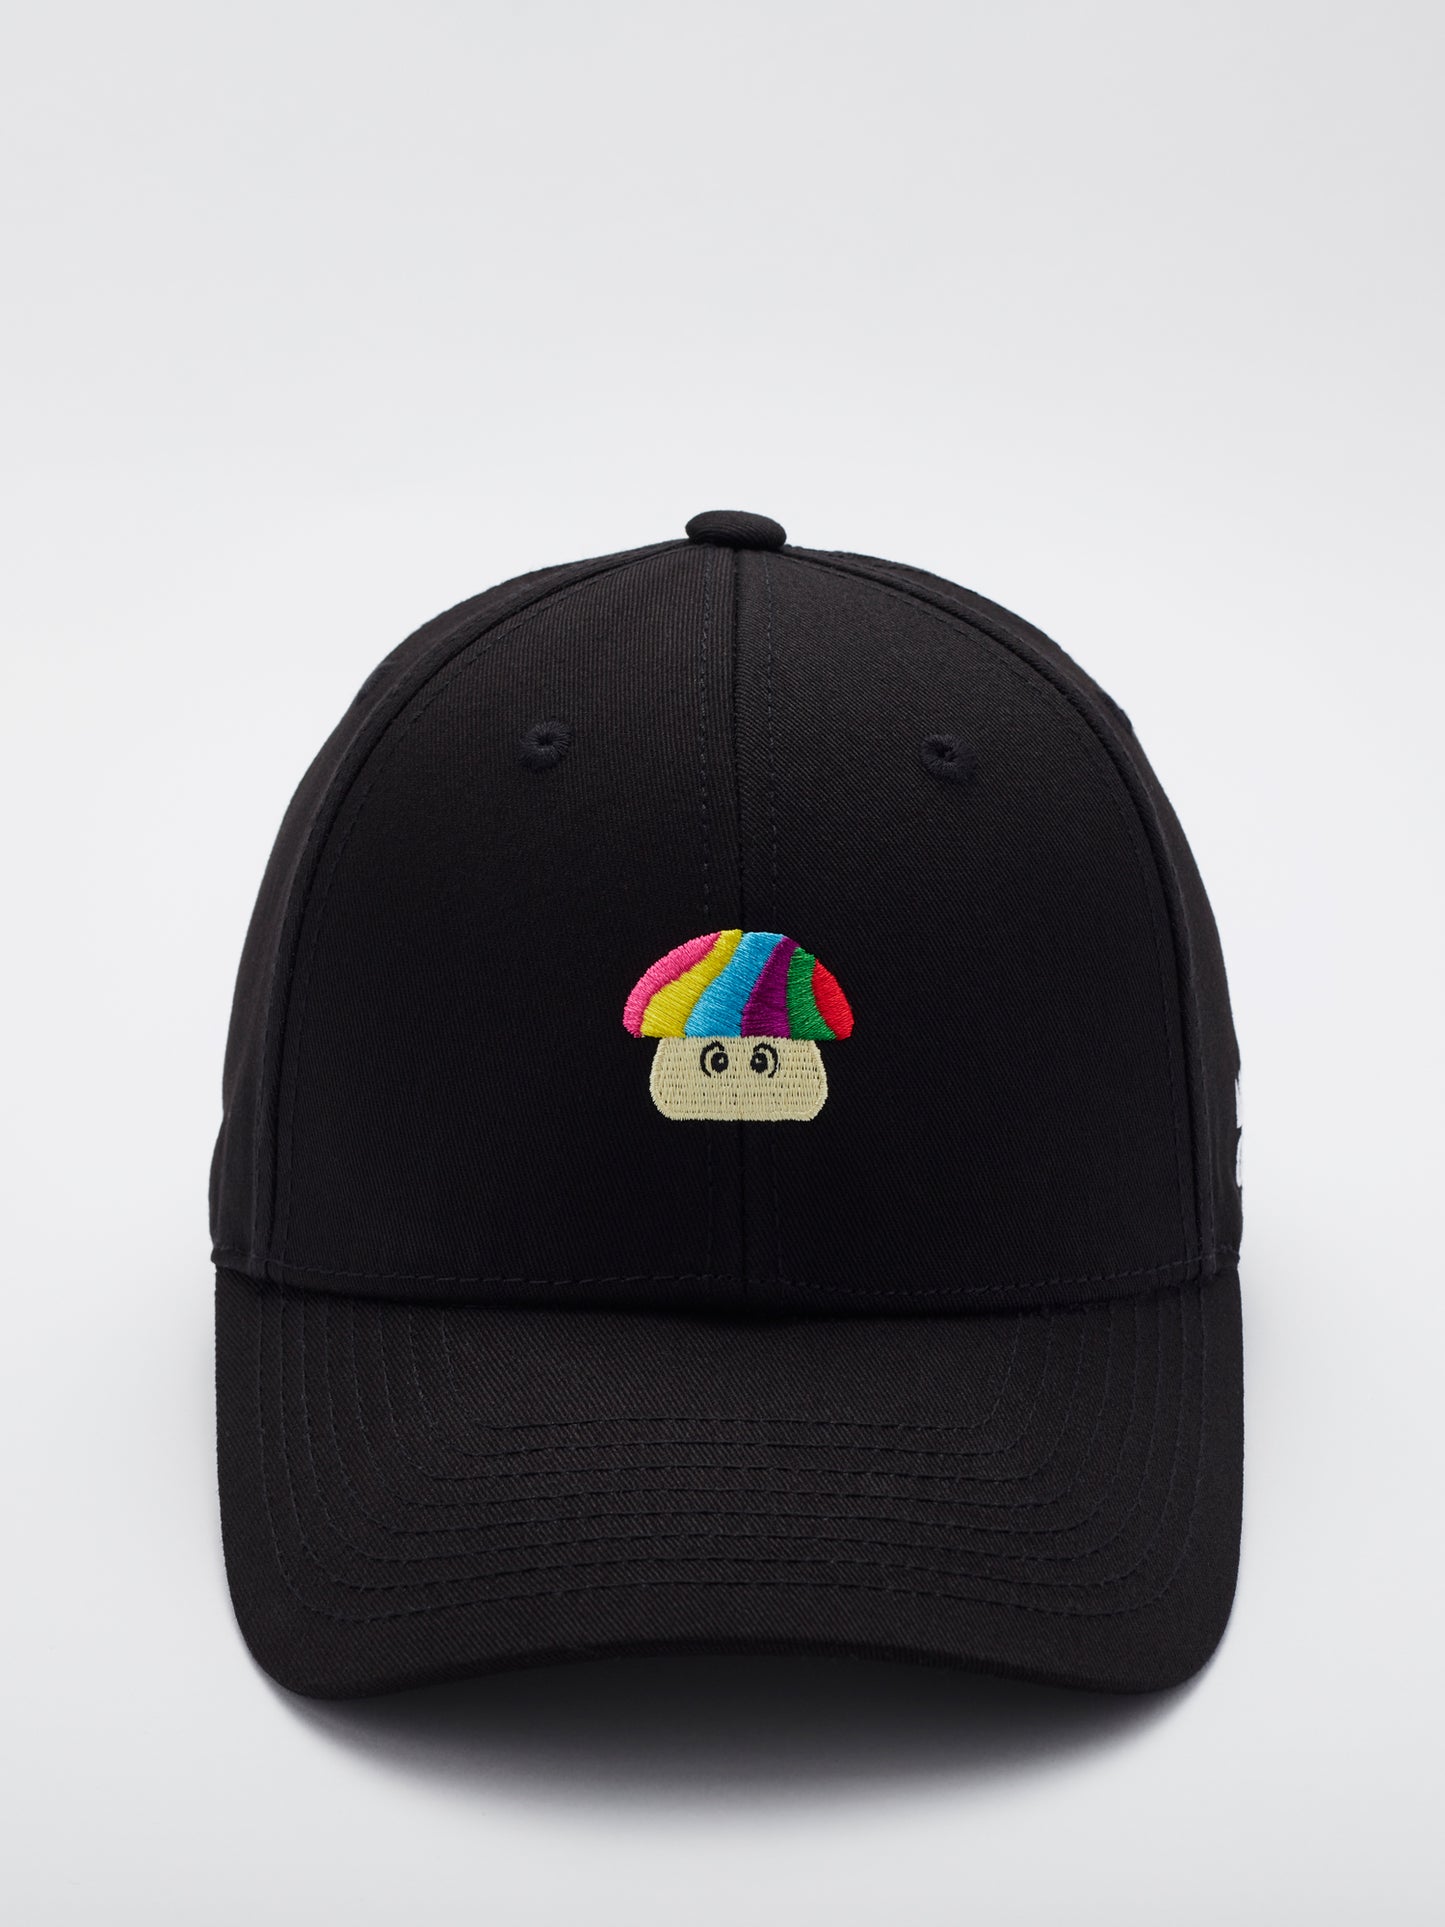 MOOD Shroom baseball cap in black - Front view